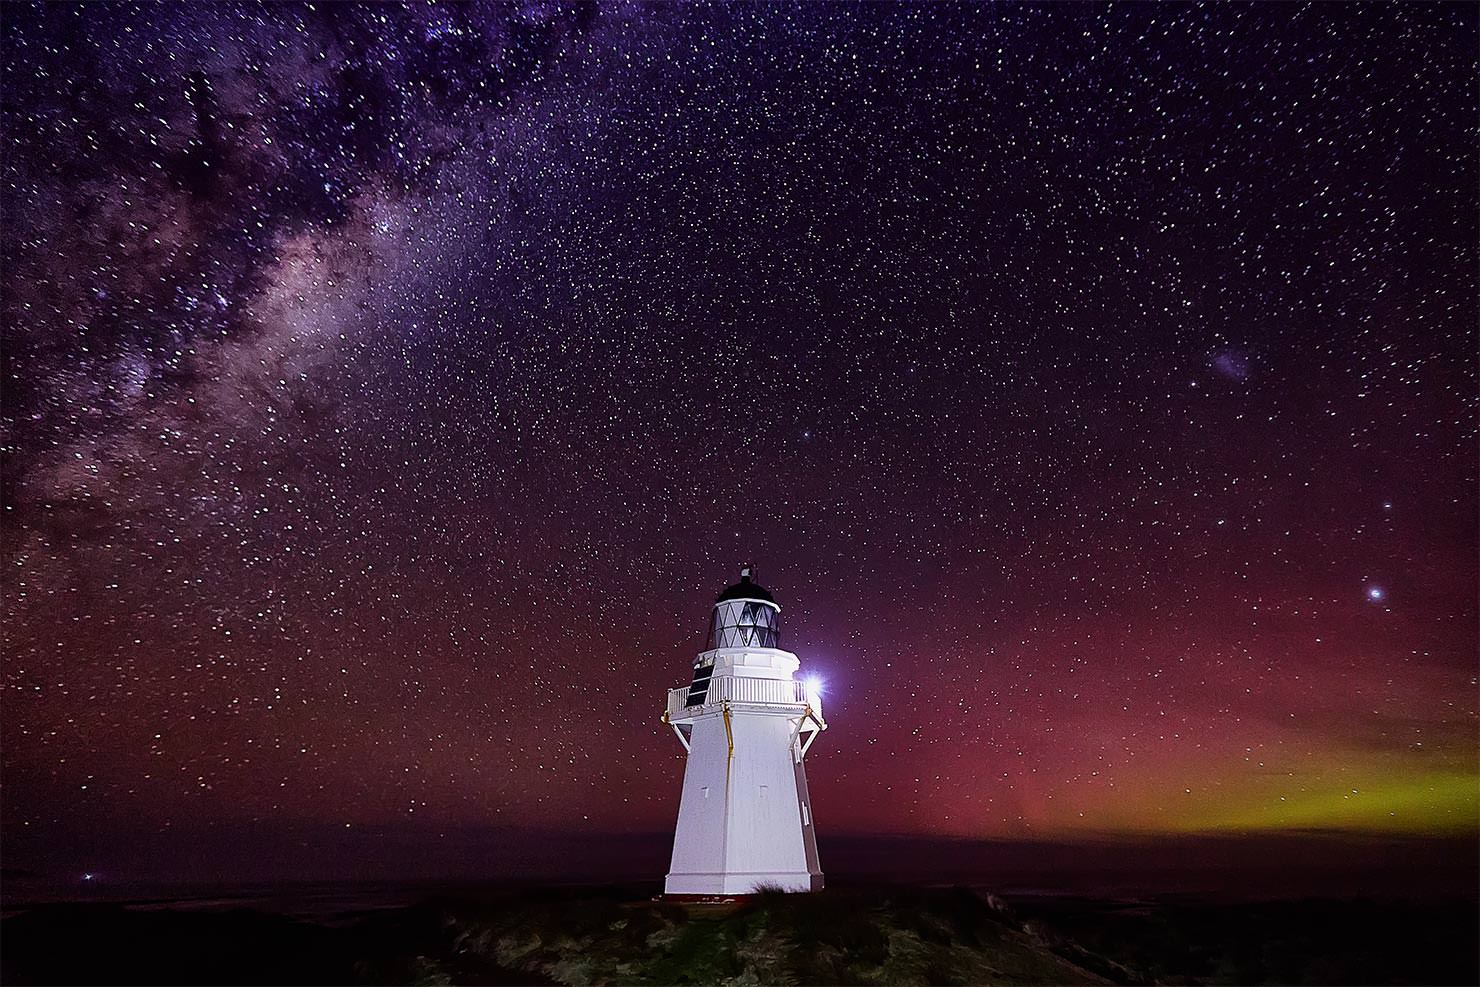 Southern Lights Aurora Australis Waipapa Lighthouse 4 Night Sky Photography New Zealand Milky Way Star Shooting Paul Reiffer Professional Landscape Photographer